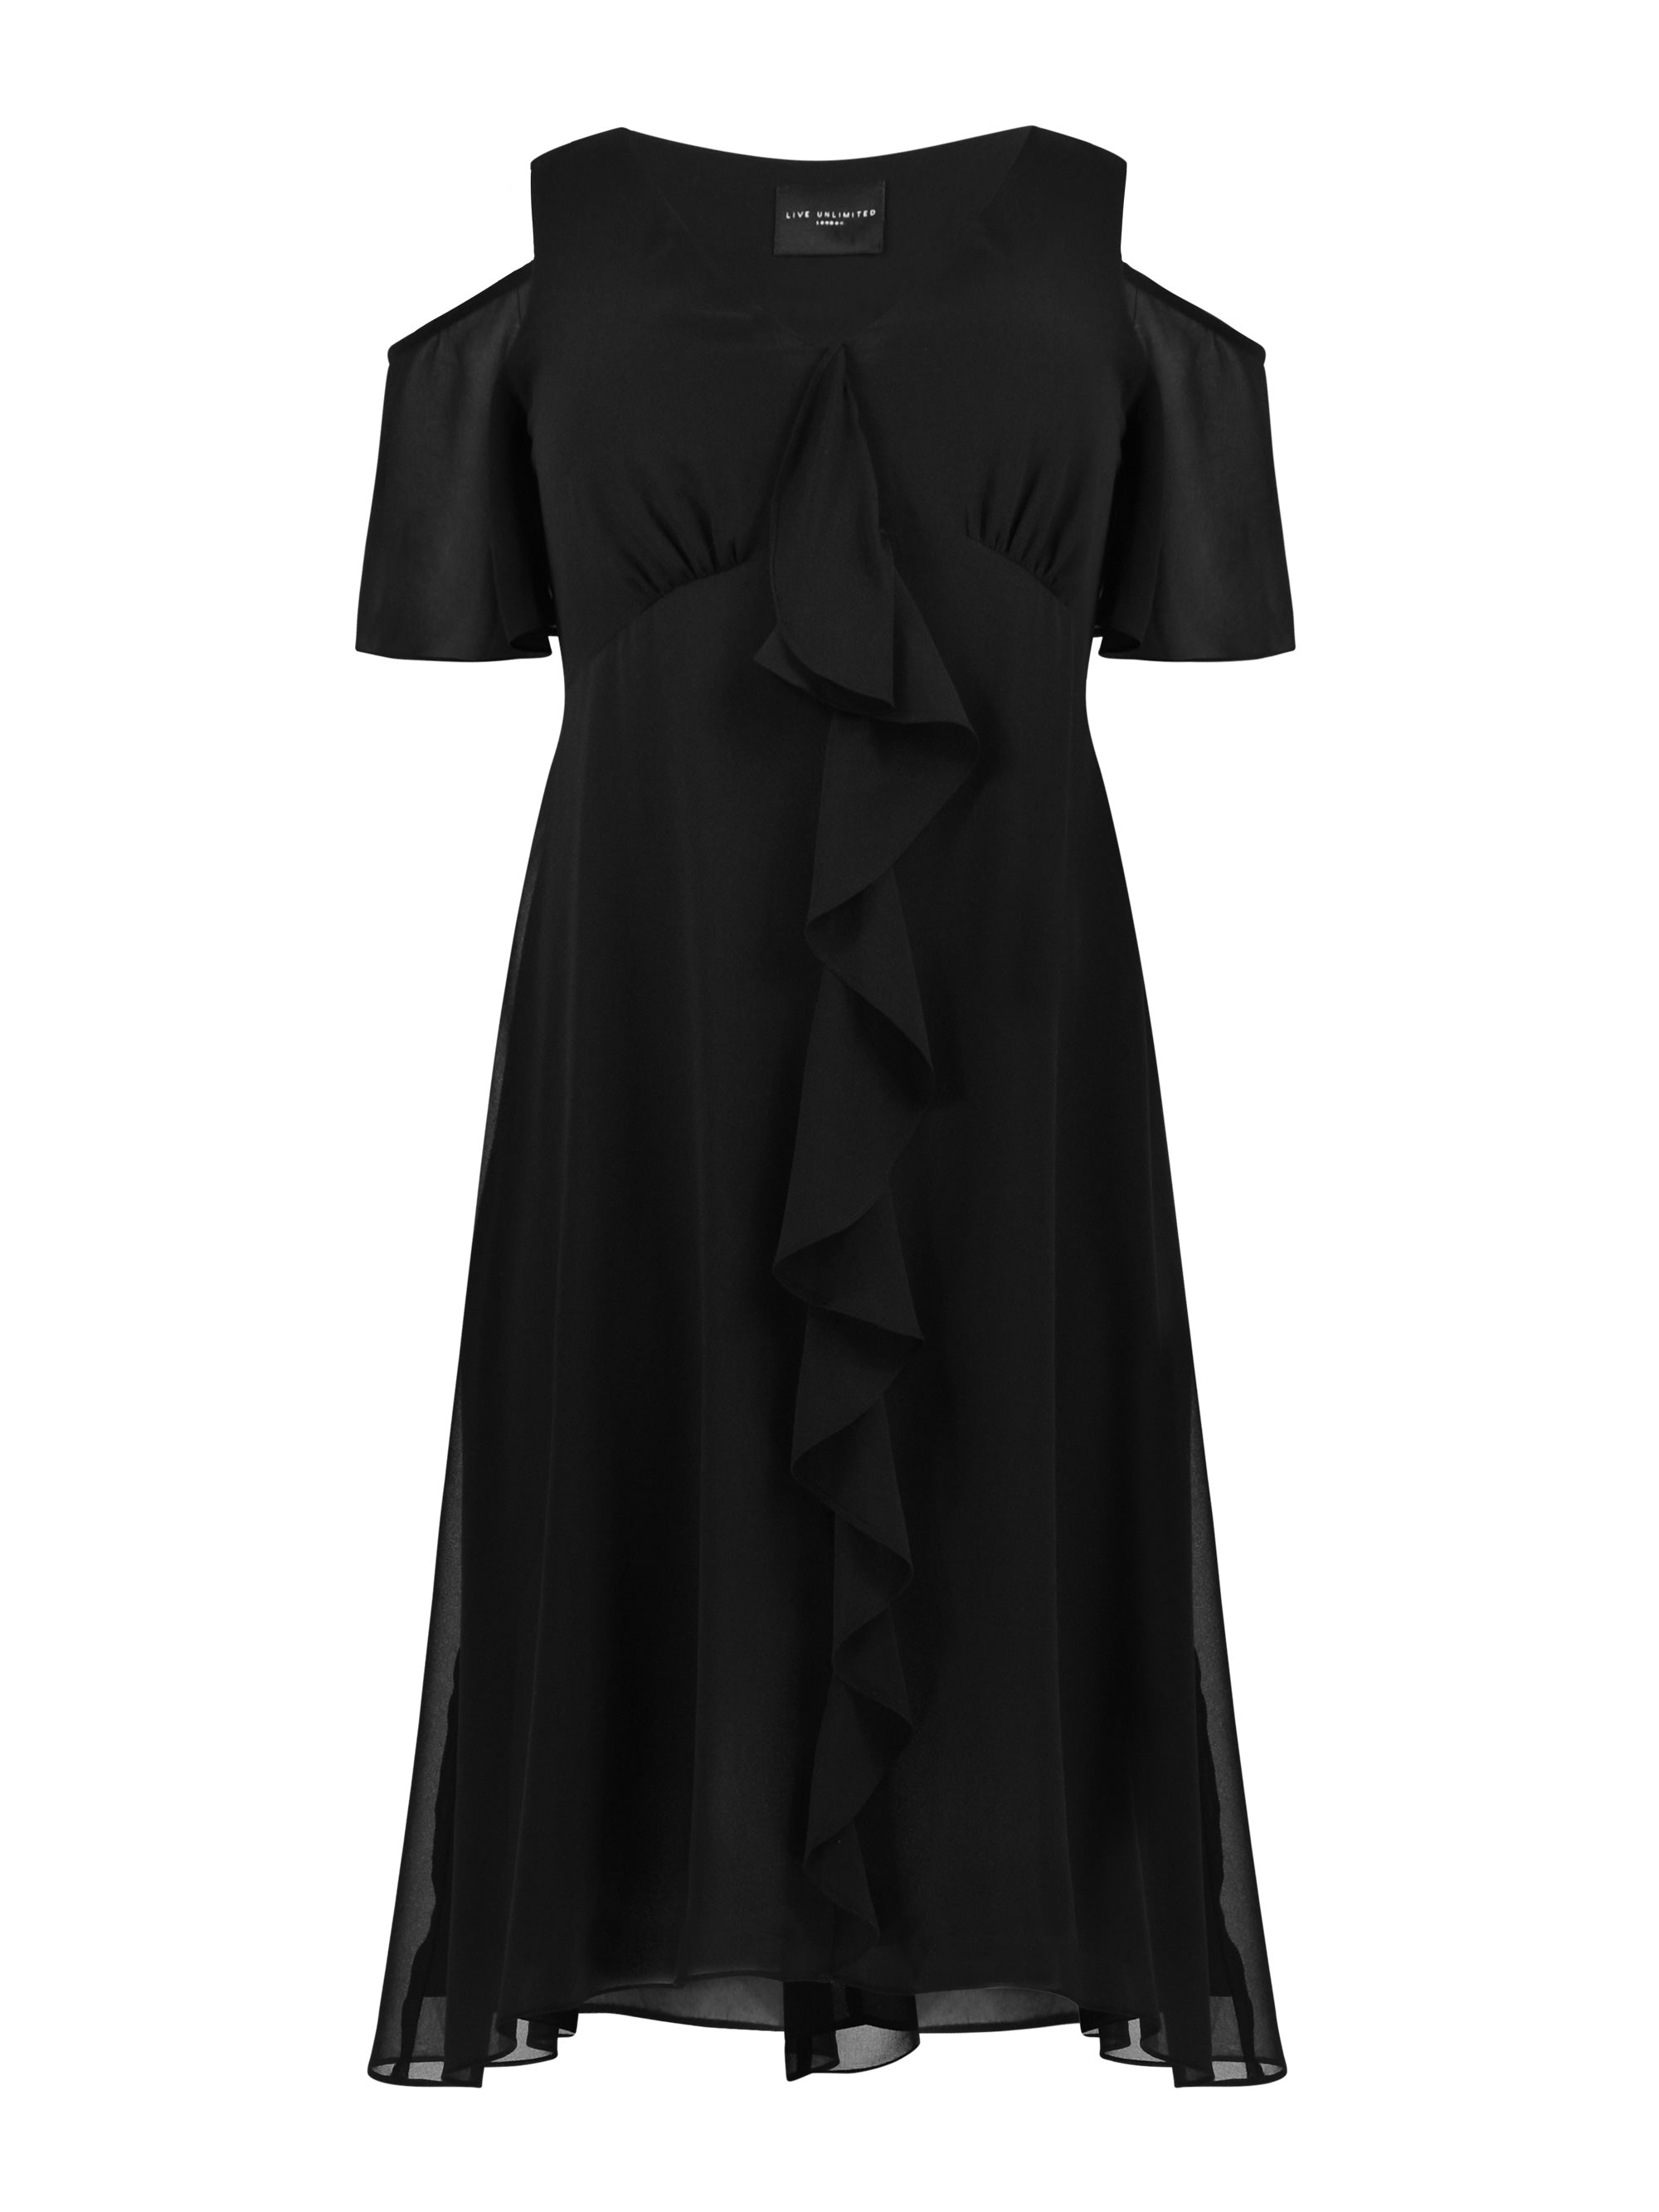 Black Ruffle Frill Front Dress